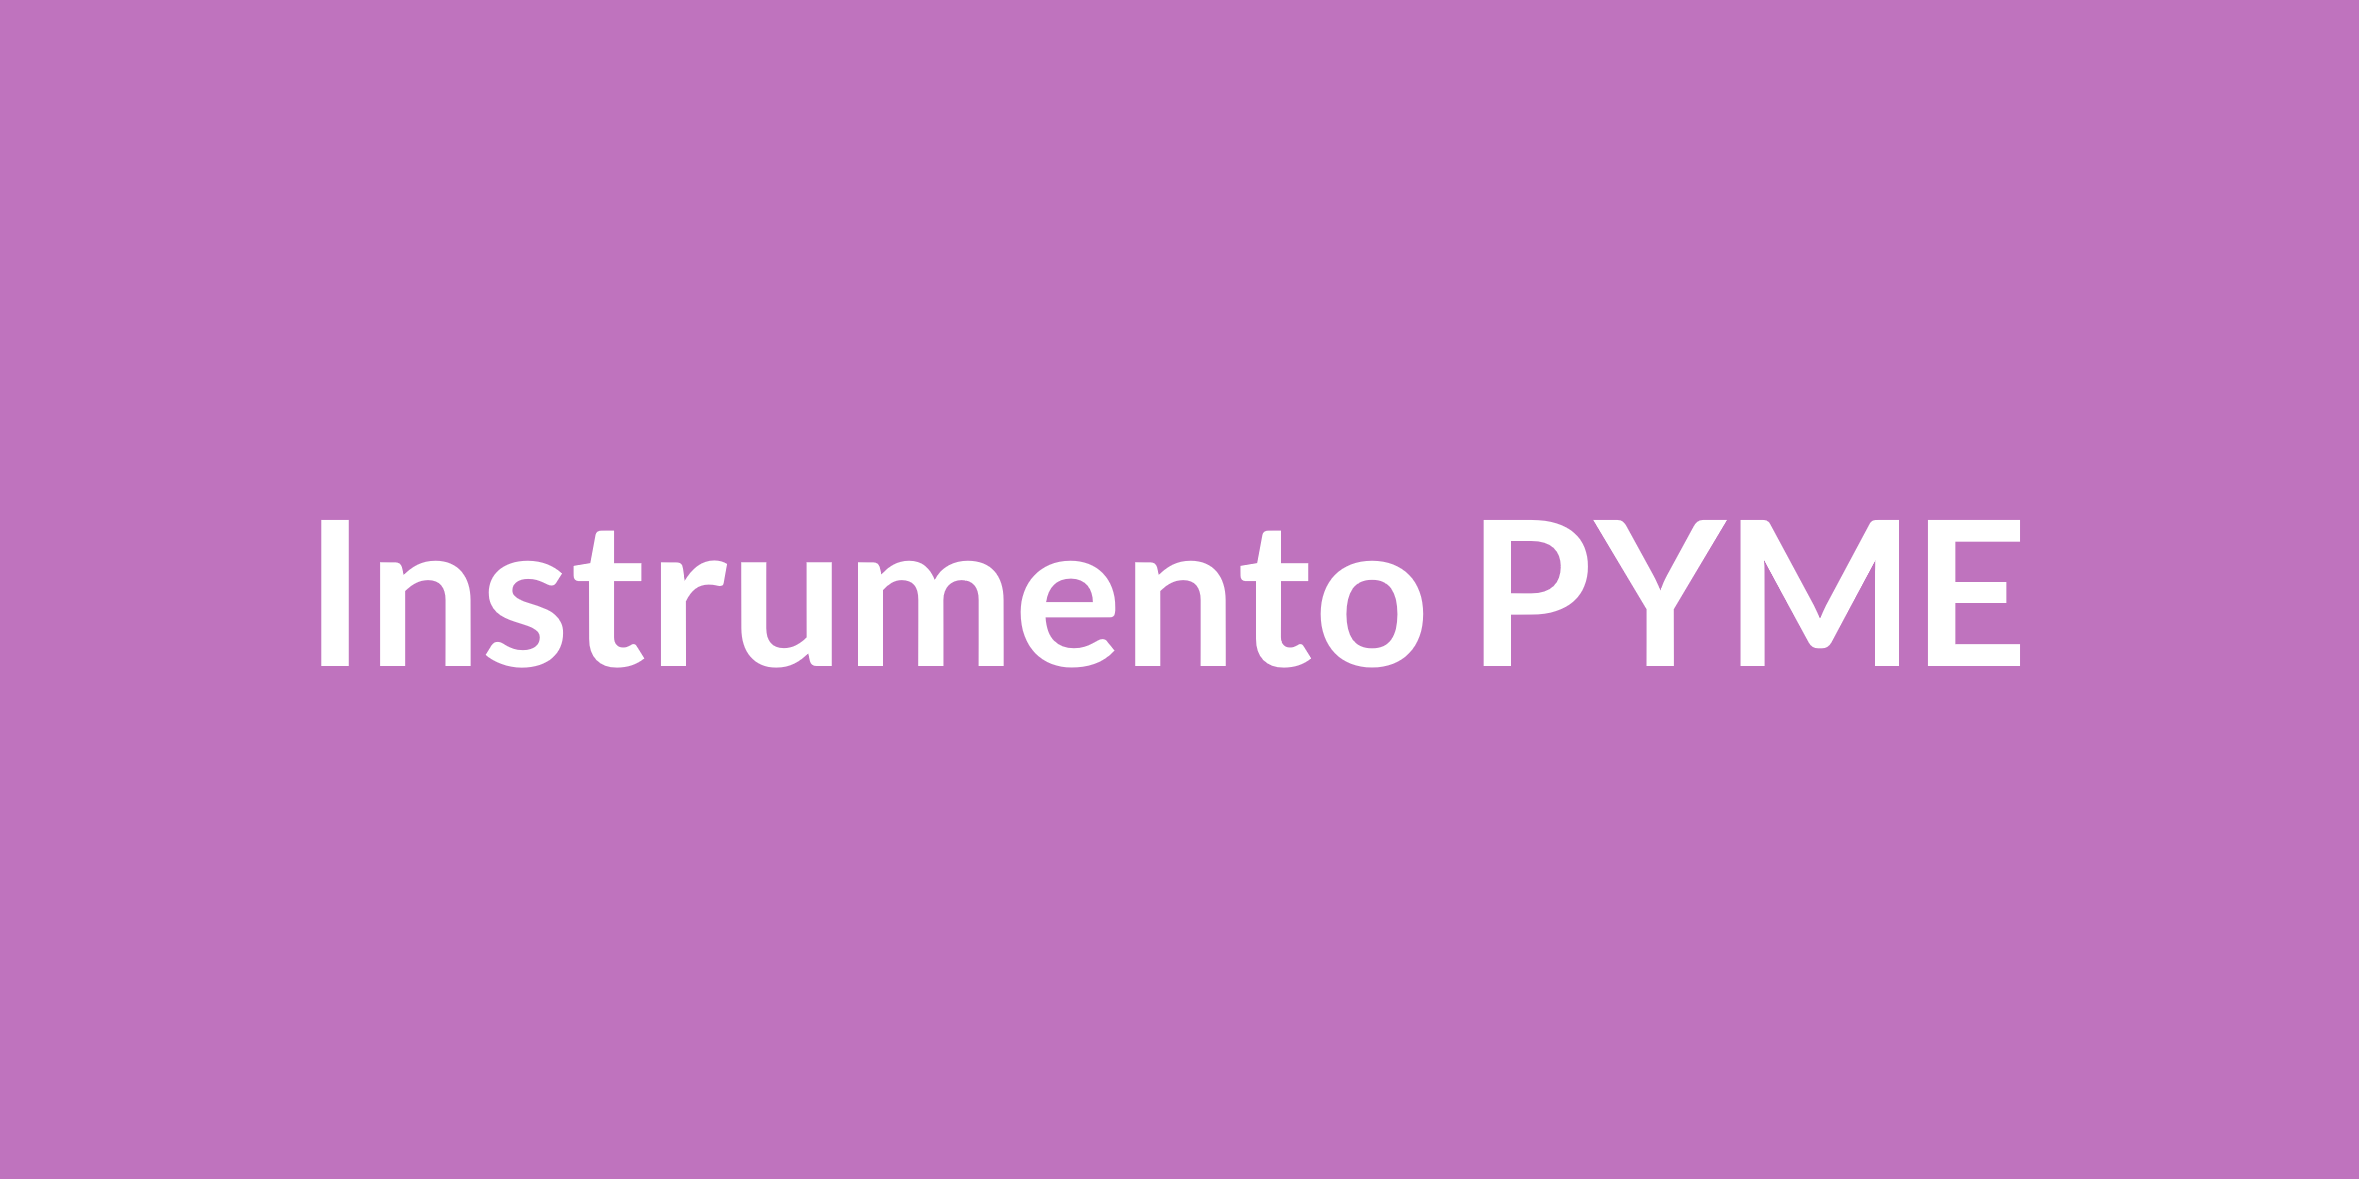 Instrumento PYME